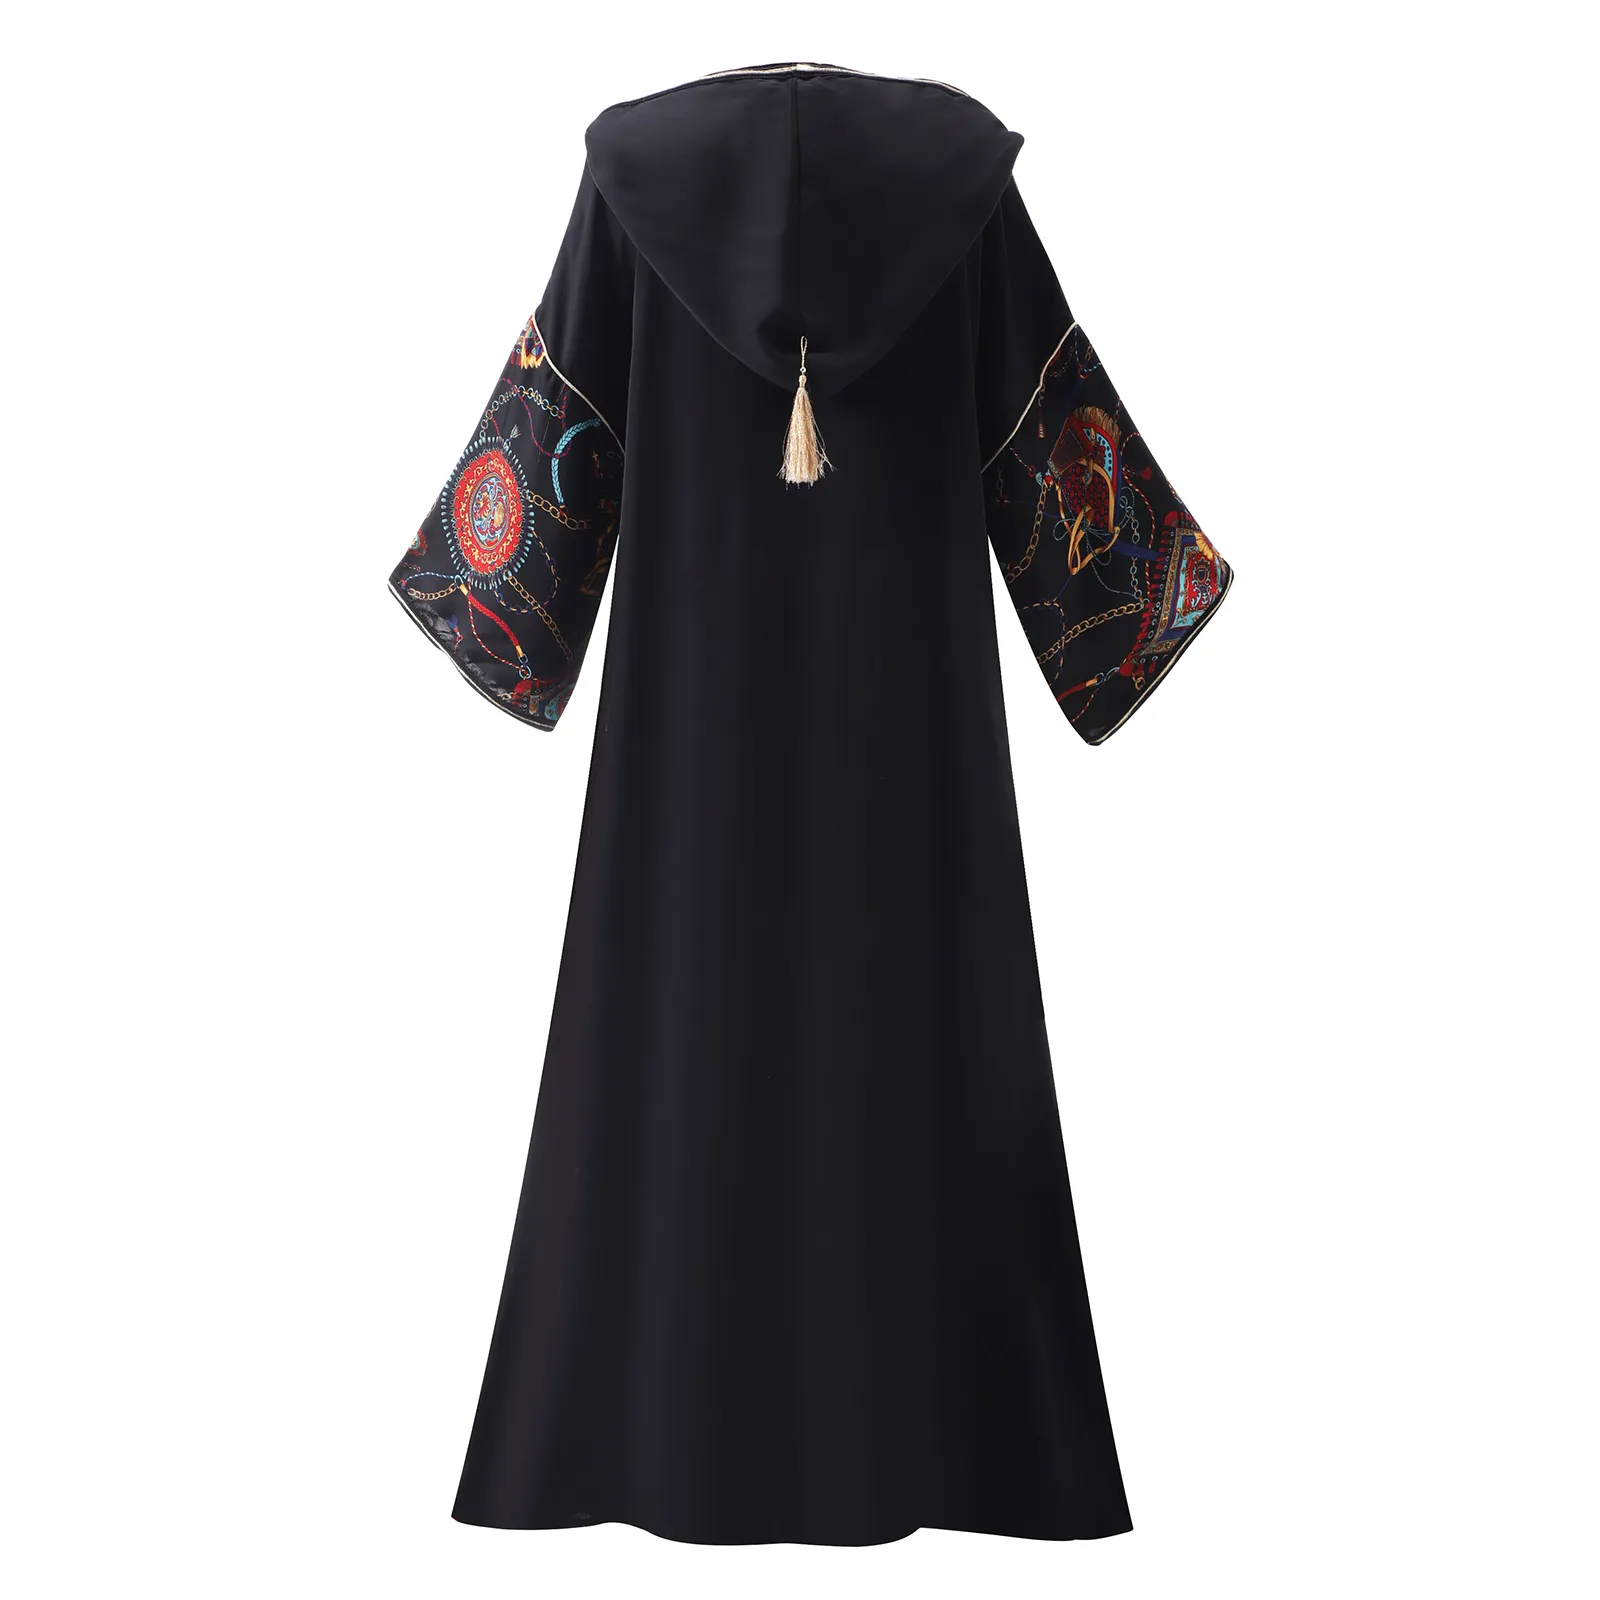 Salwar kameez baju kurung молитва abaya dubia abaya платье lehenda lahenda холевые платья kurti для женщин по низкой цене